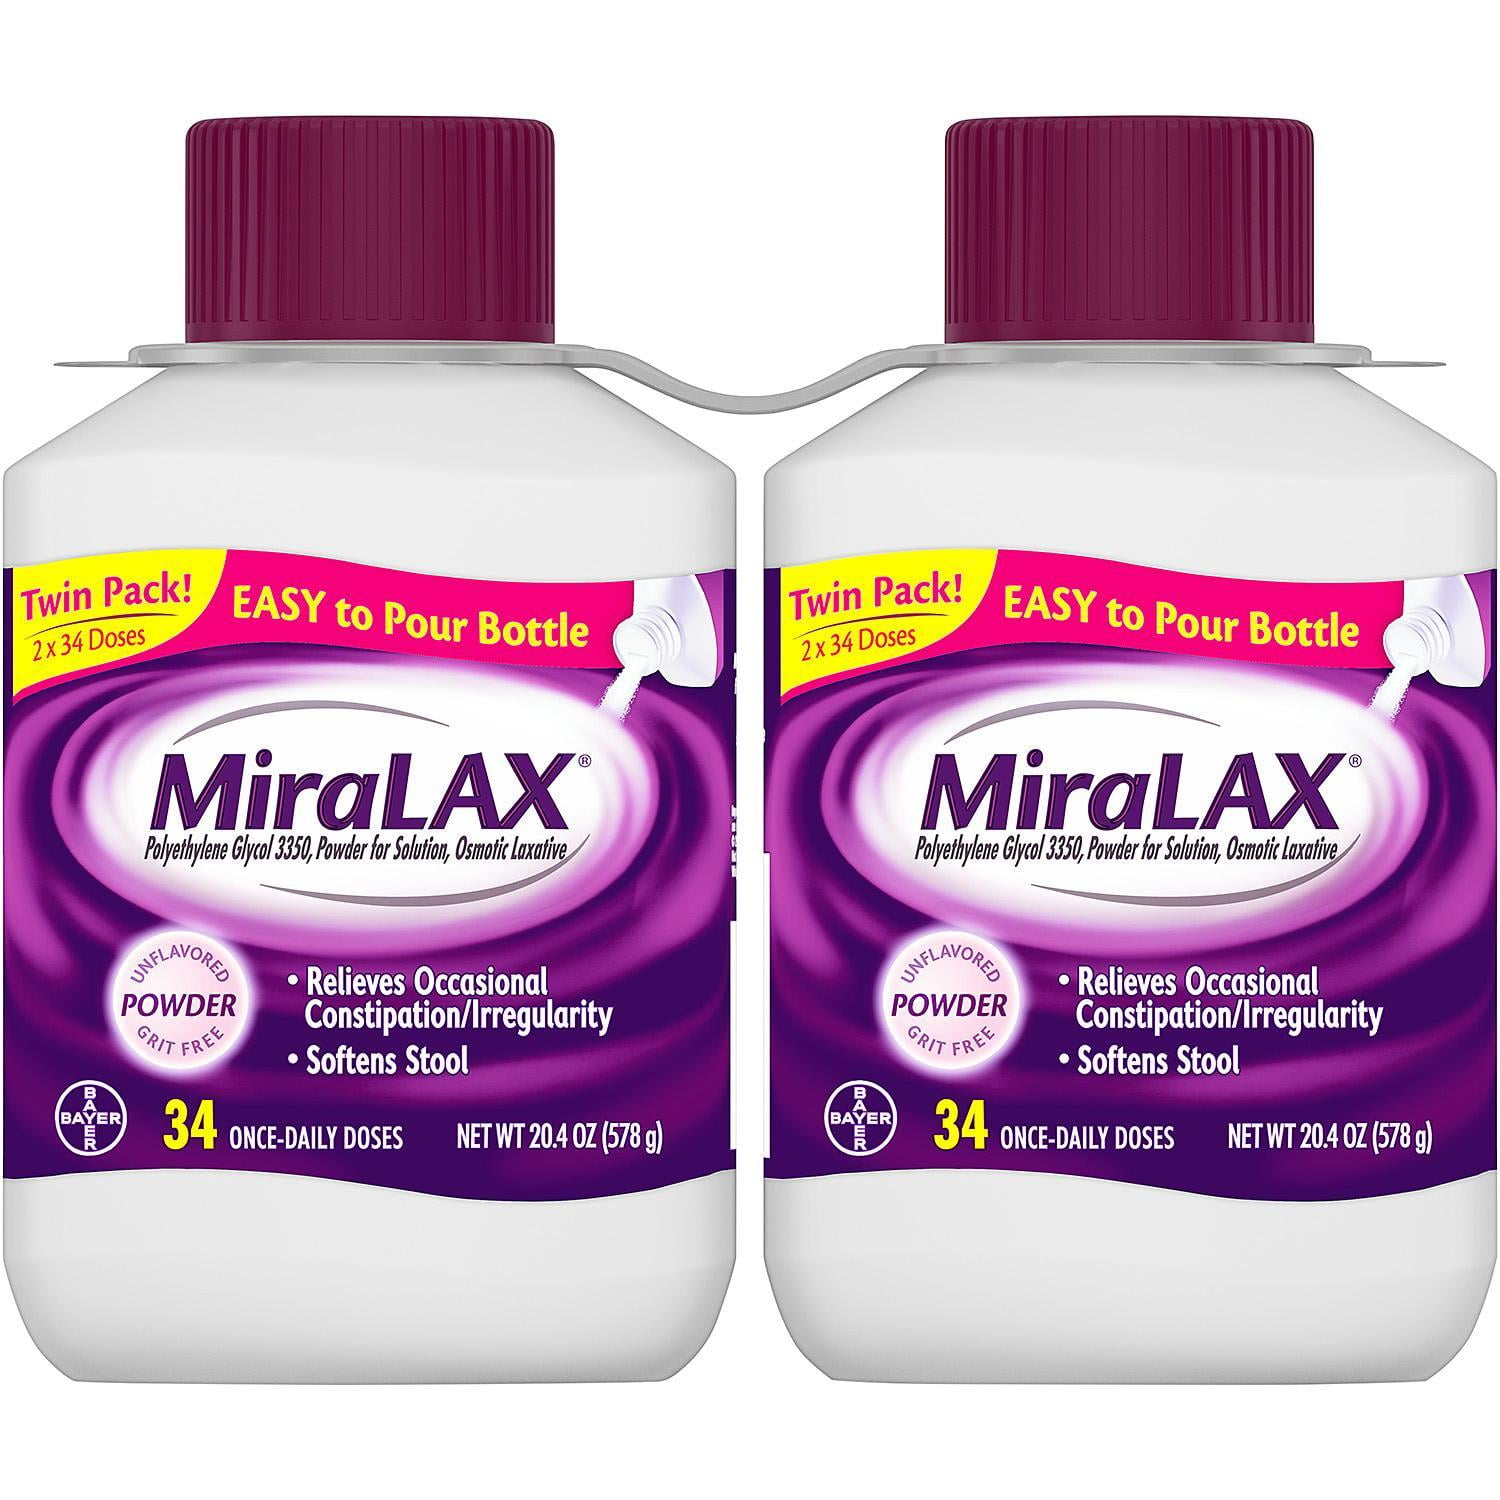 miralax-twin-pack-2-bottles-34-doses-walmart